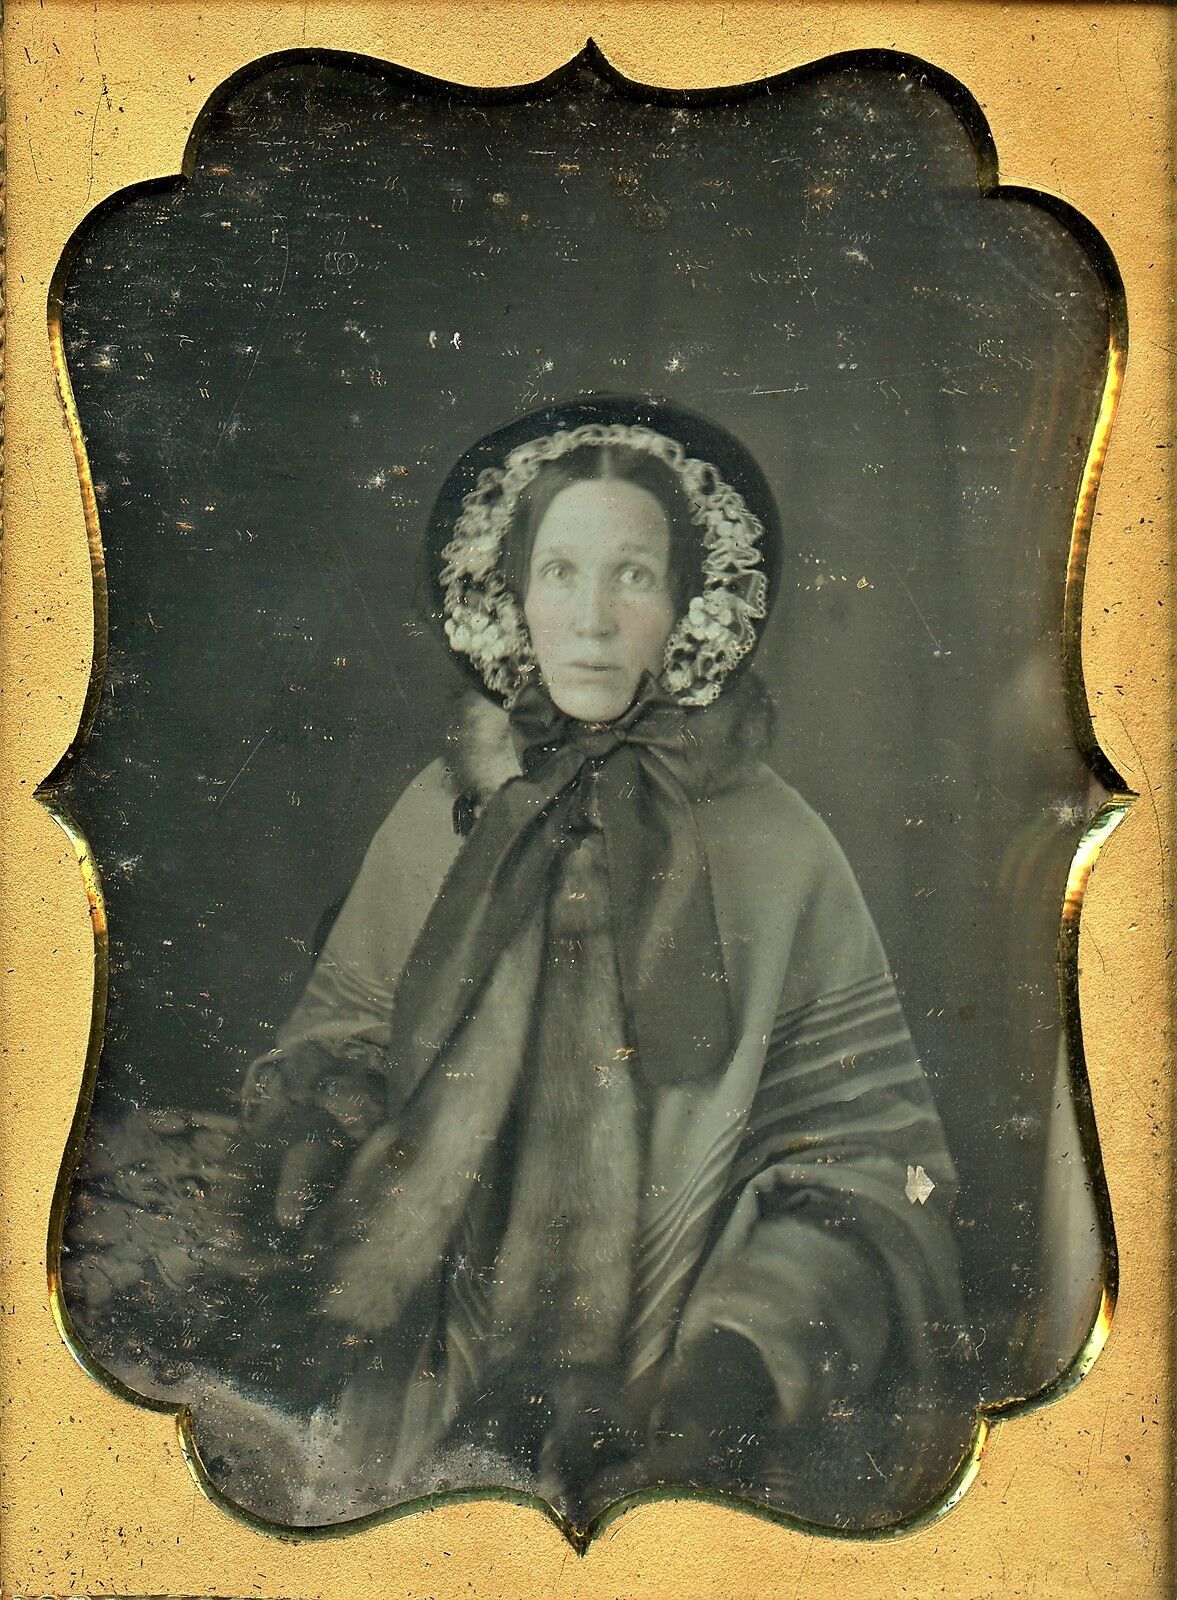 Victorian Woman in Winter Fashion Cloak, Bonnet Hat, Vintage Daguerreotype Photo